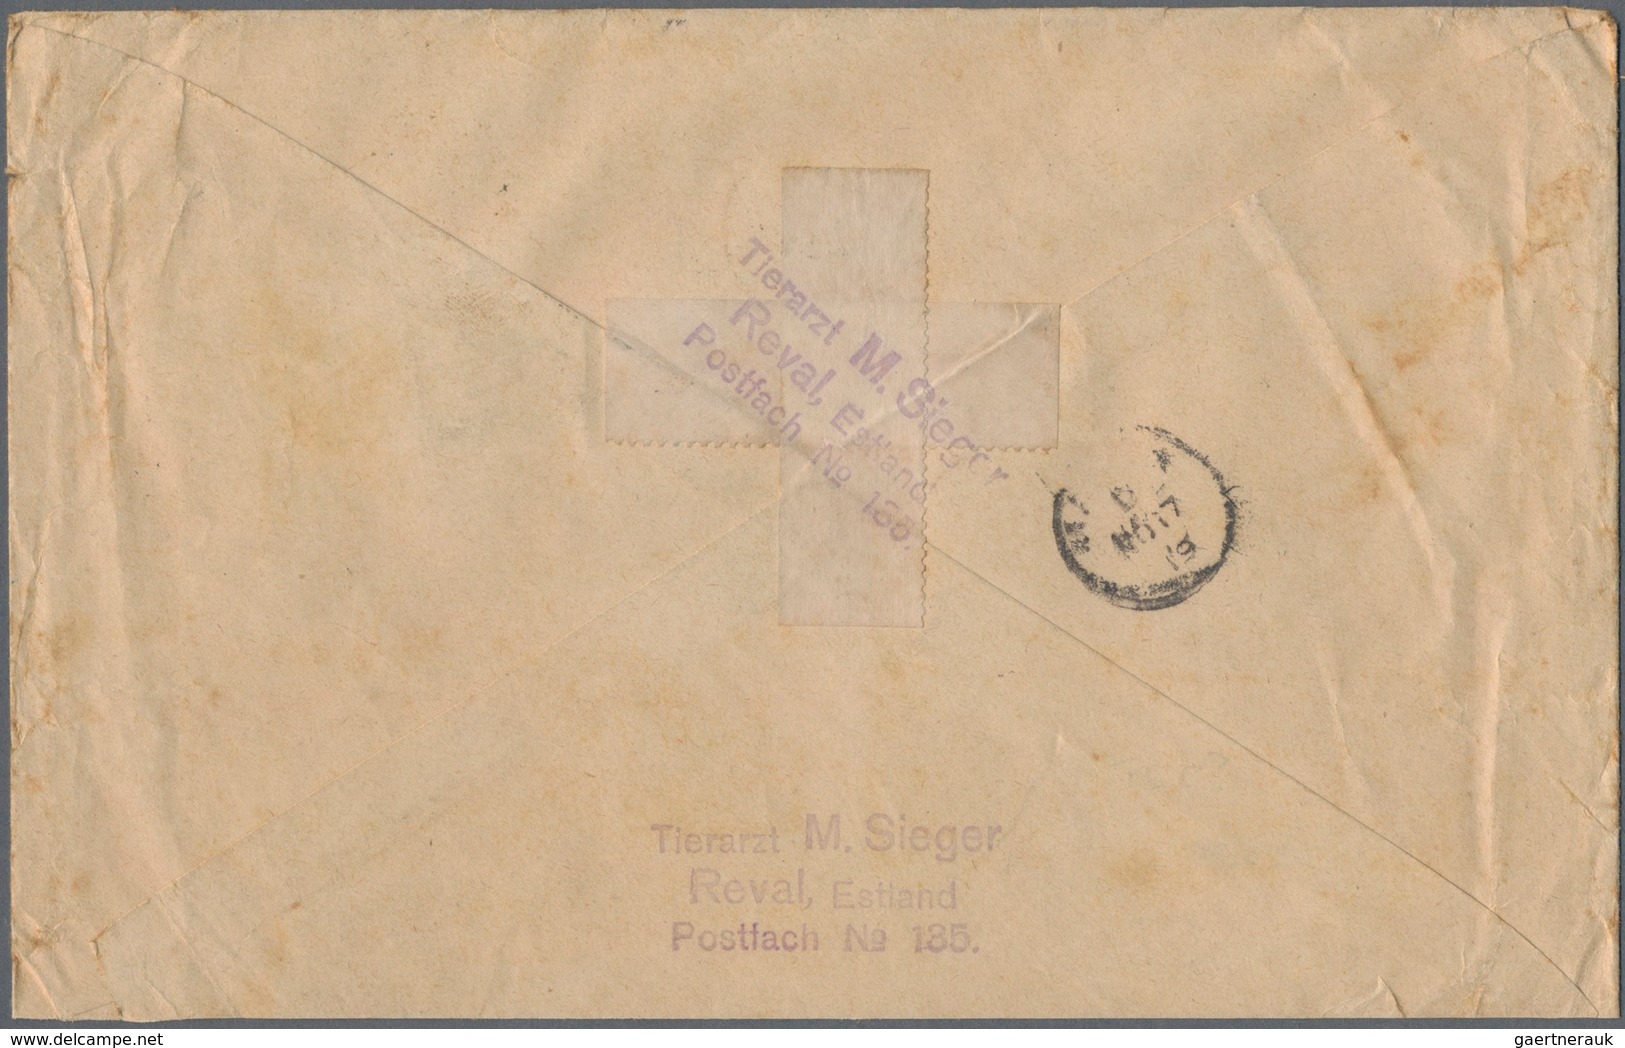 Estland: 1919, Registered Letter From TALLINN 12.10.19 To Valetta, Malta. Rare Destination. - Estland